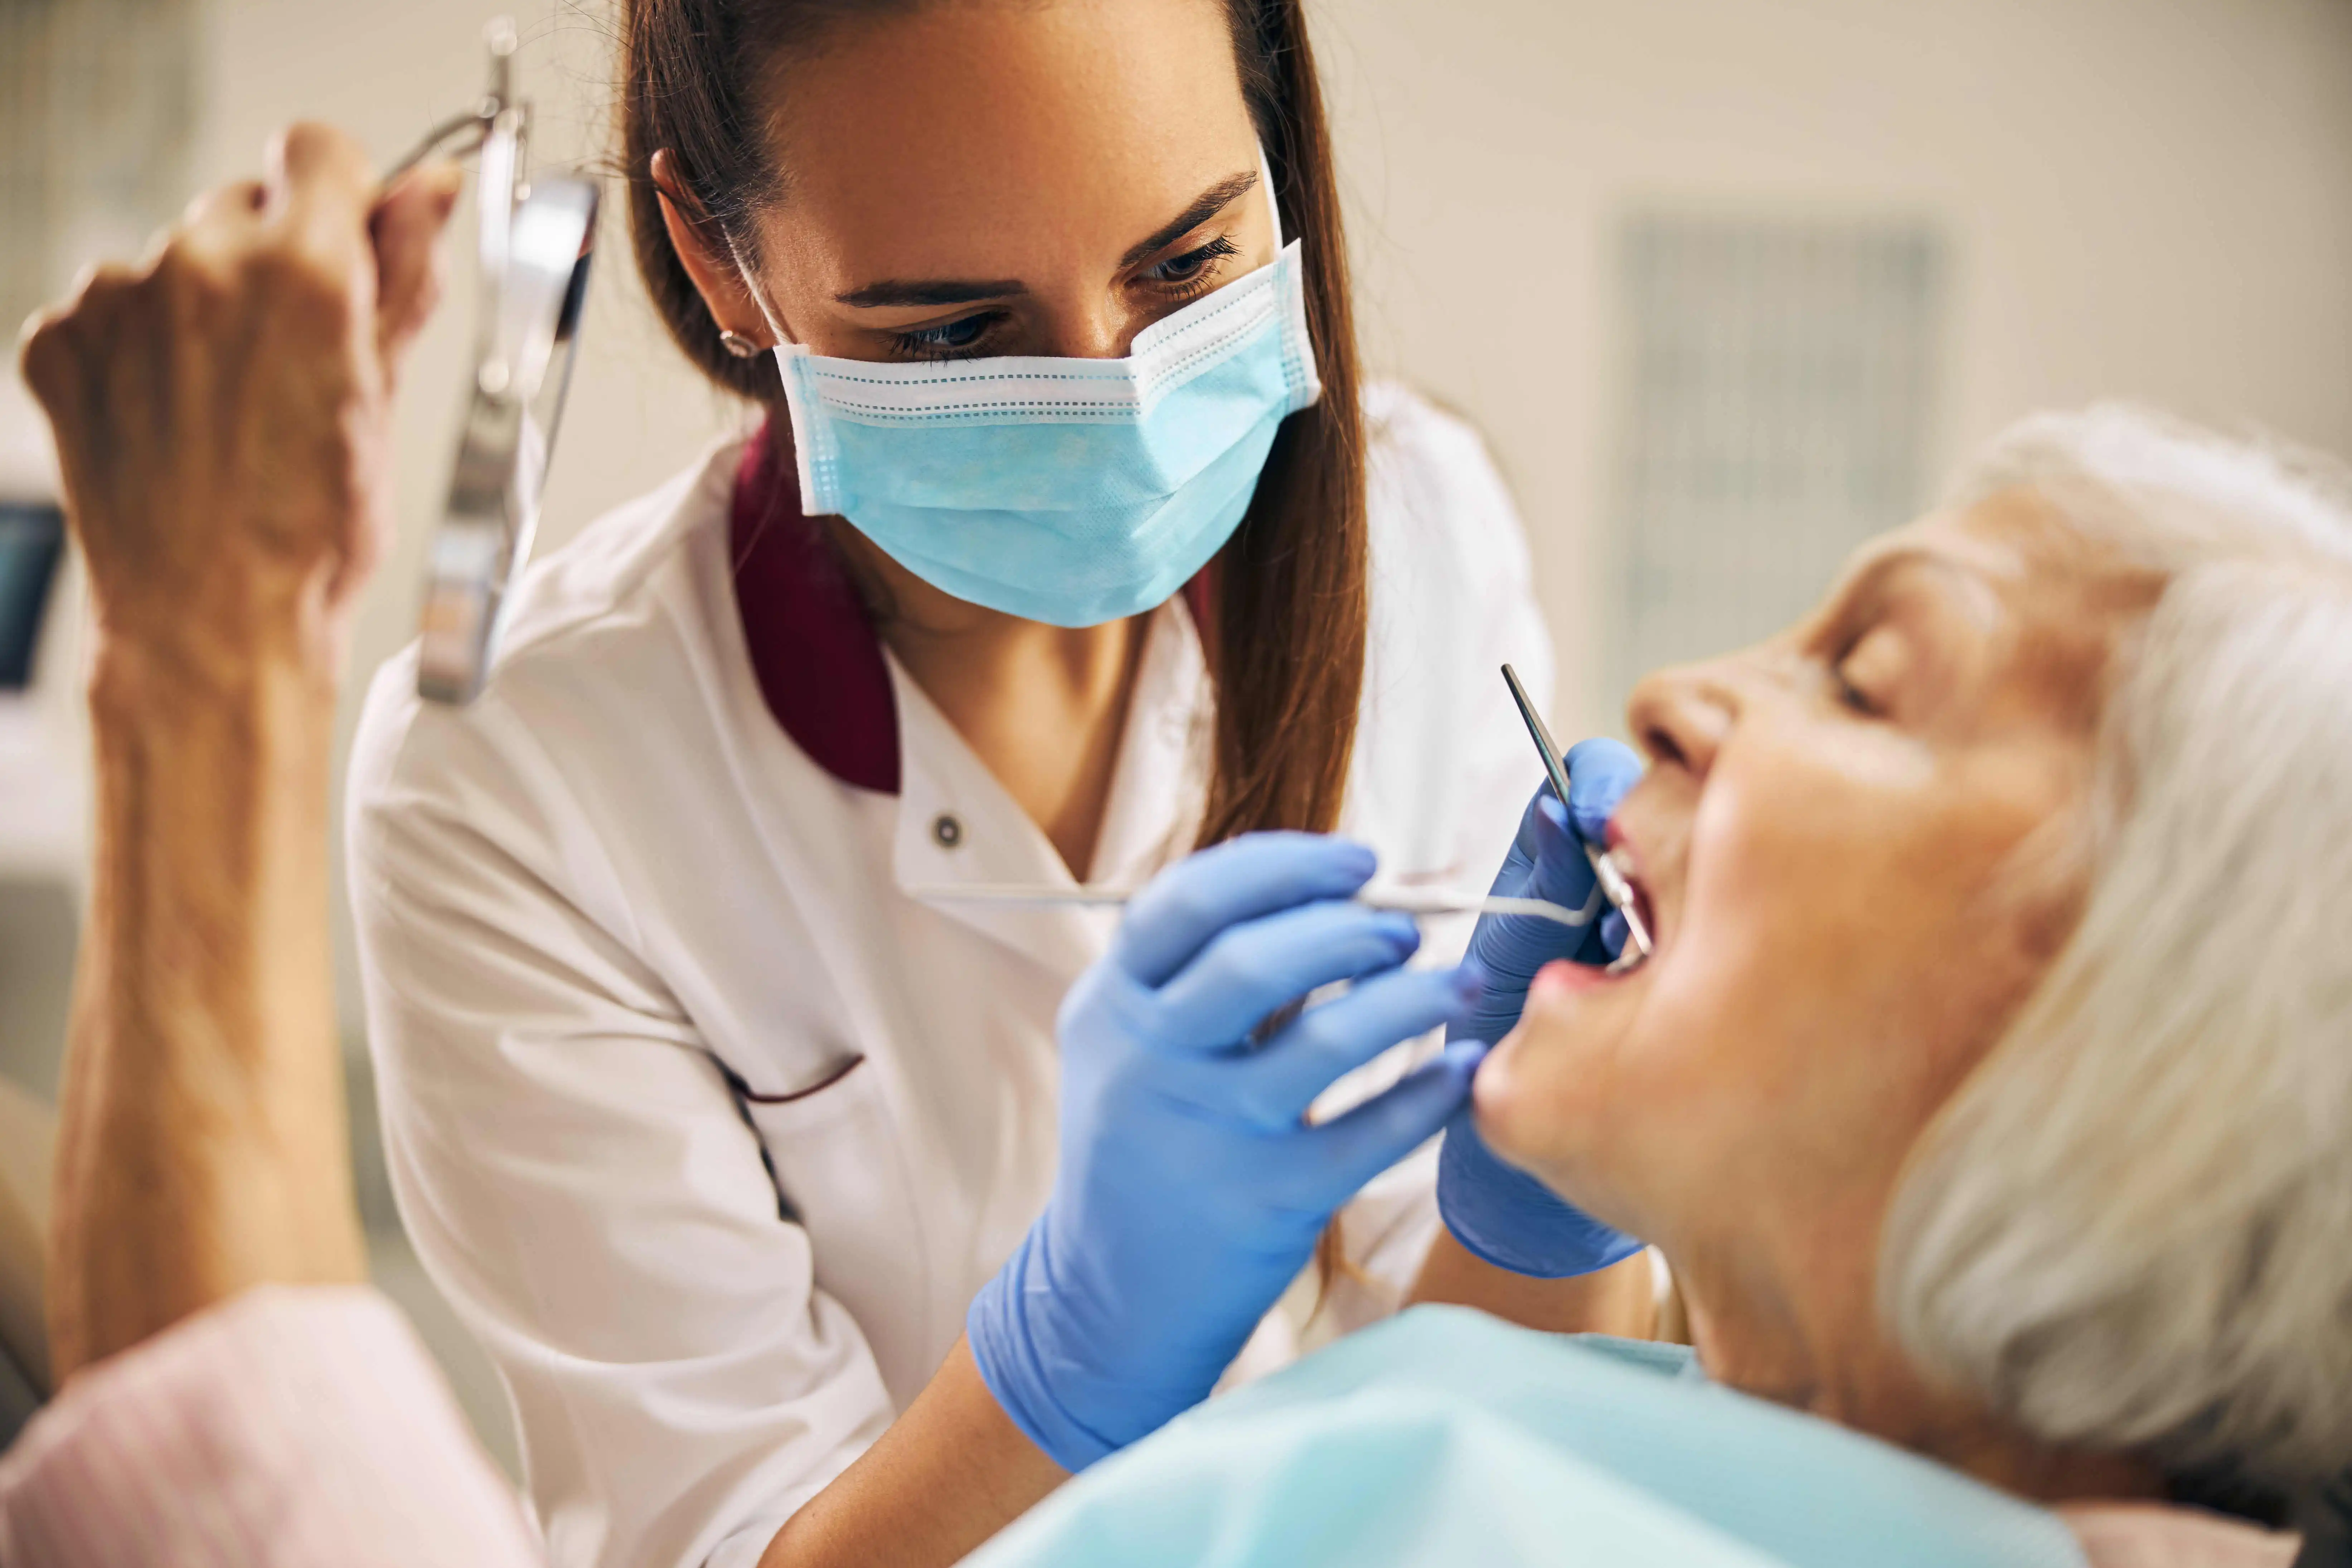 Does Dental Insurance Cover Dental Implants